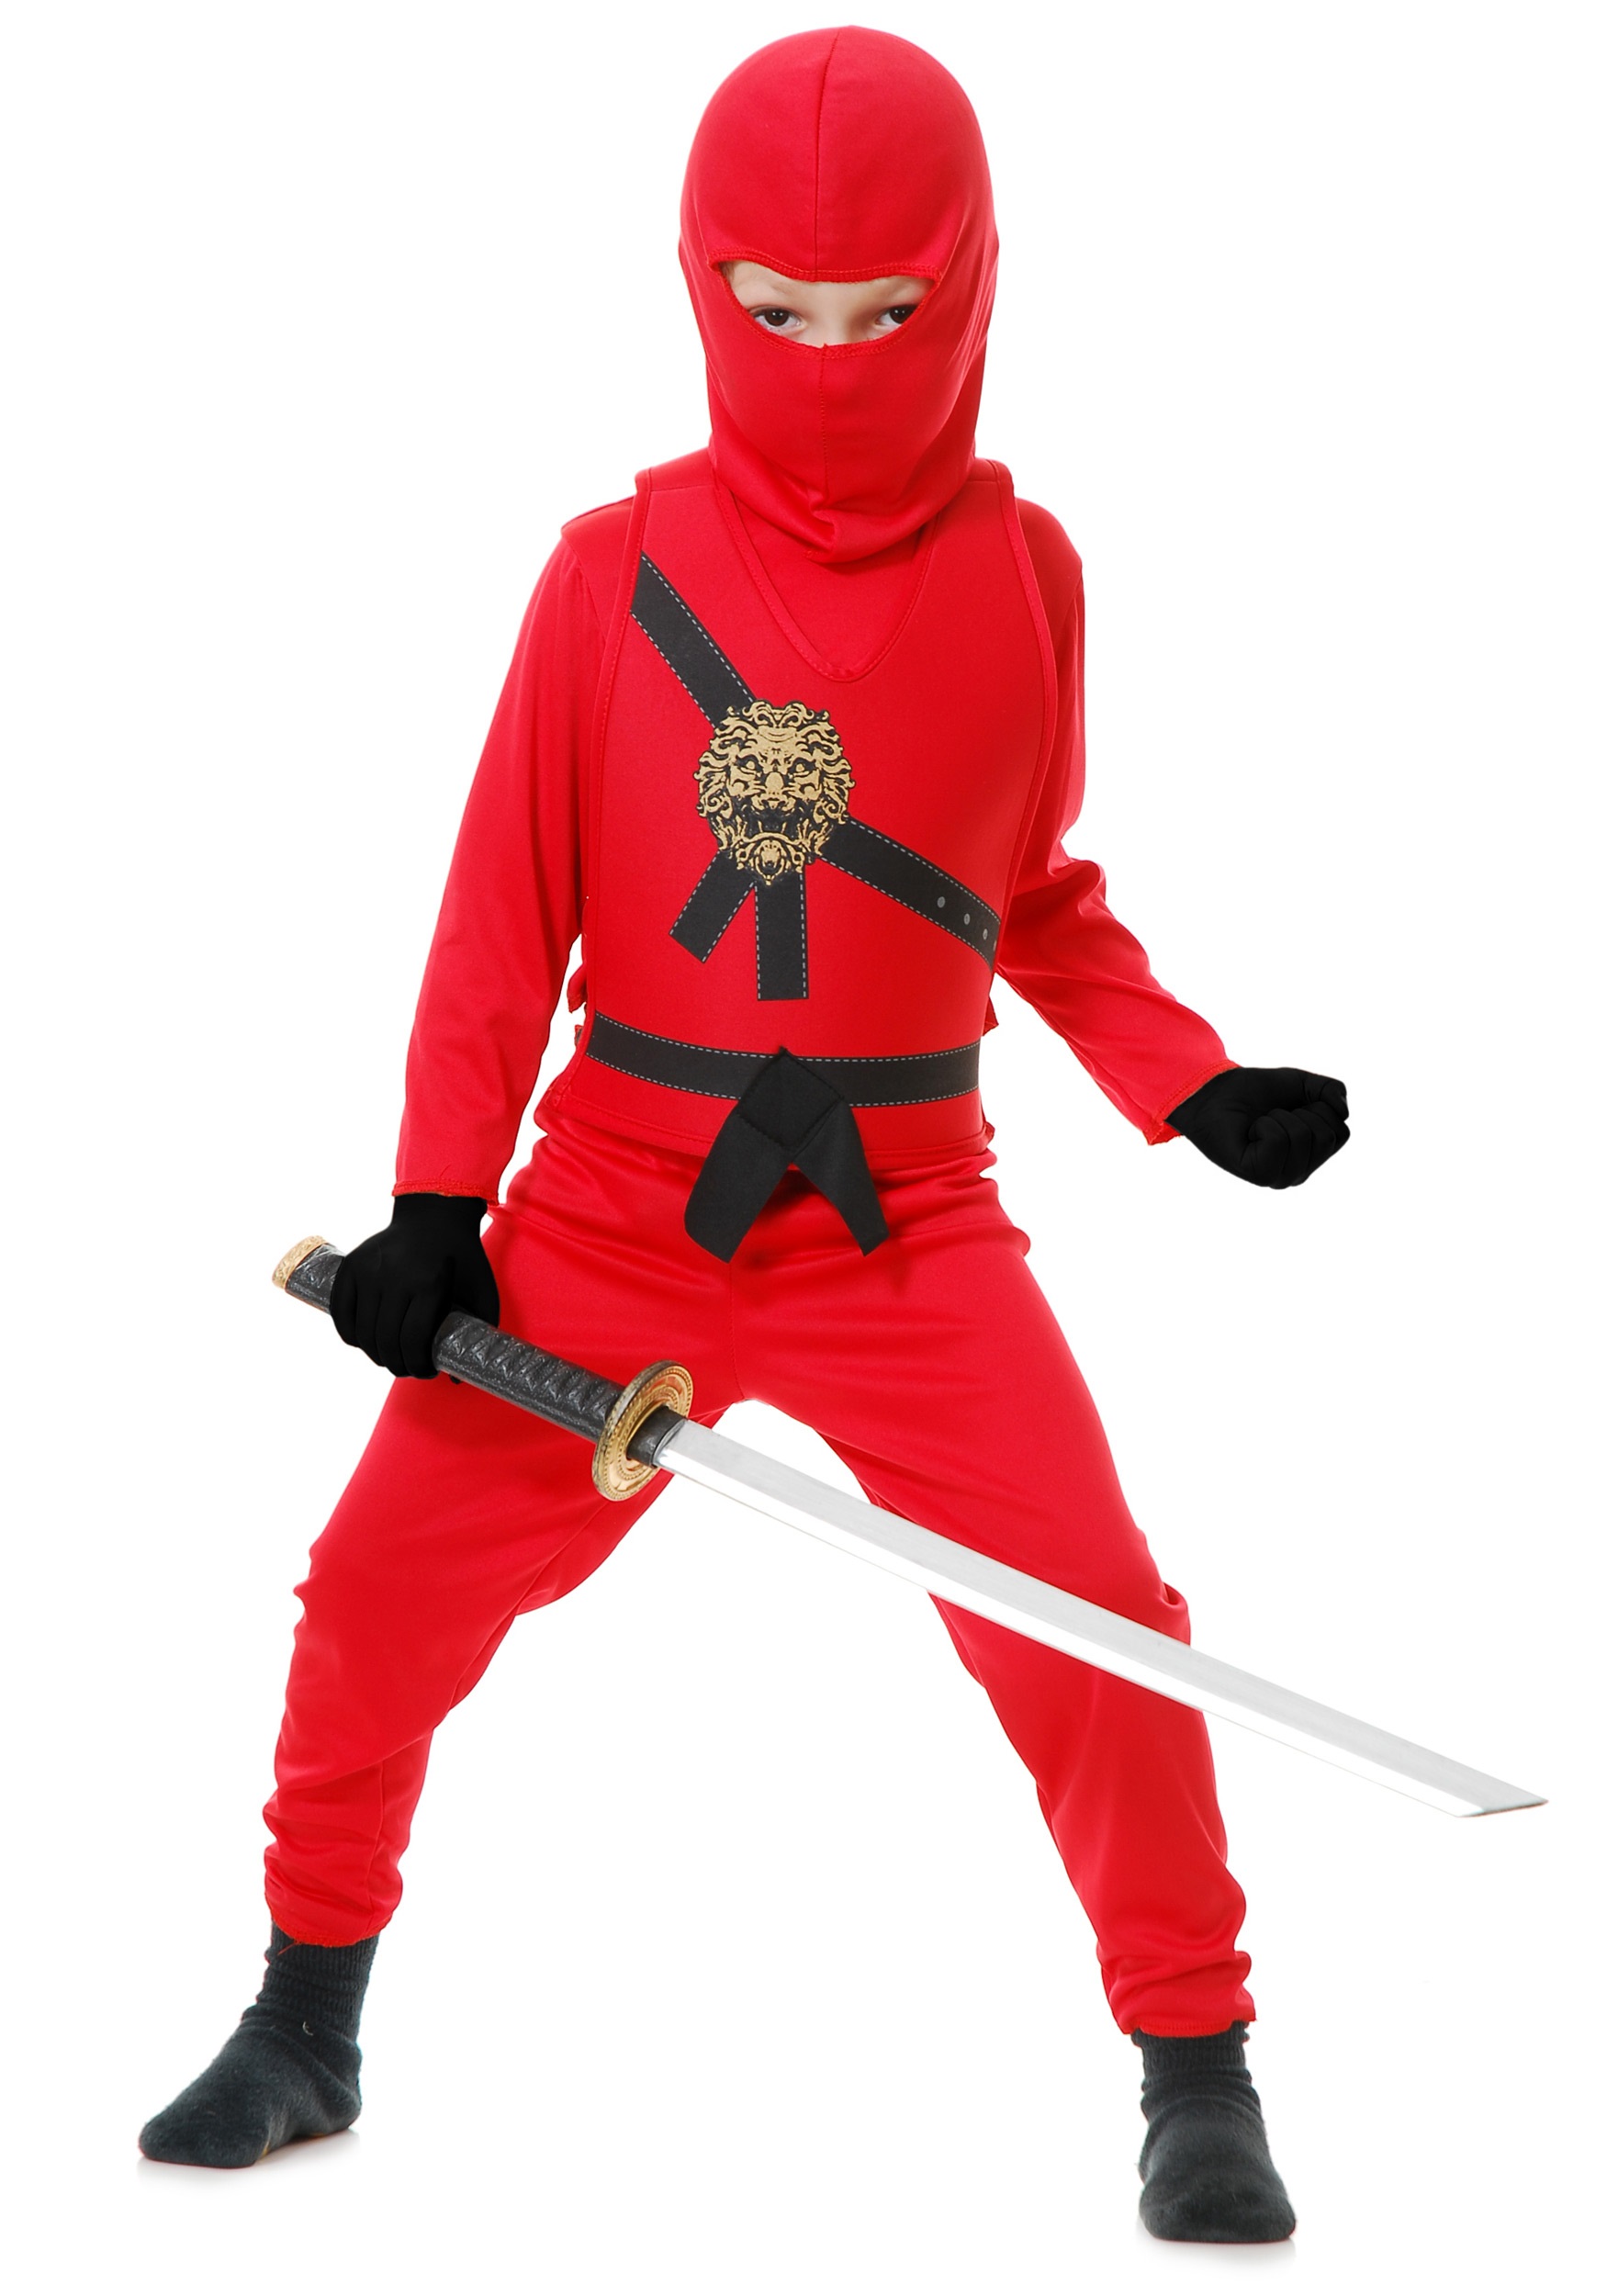 Size:Small 4-6 Child's Boy's Ninja Warrior Costume